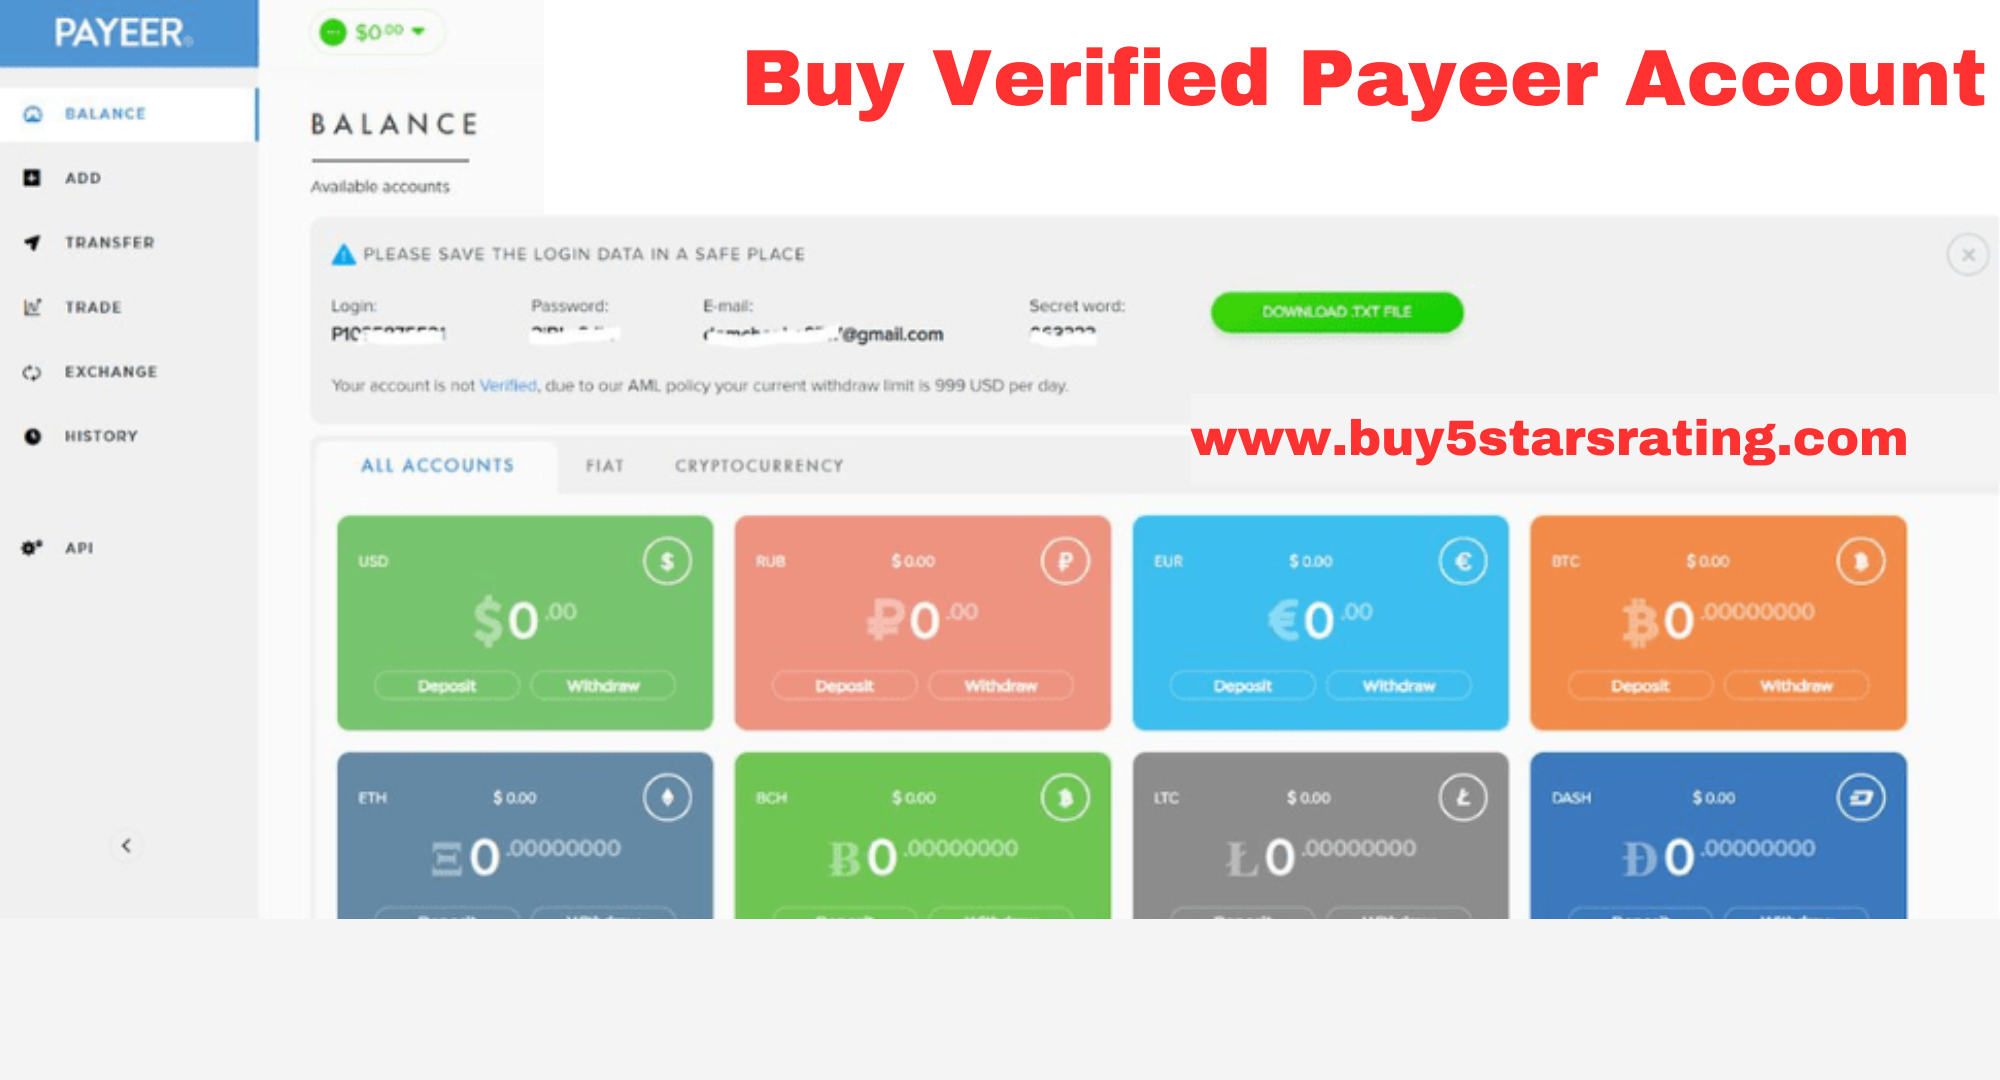 Buy Verified Payeer Account
